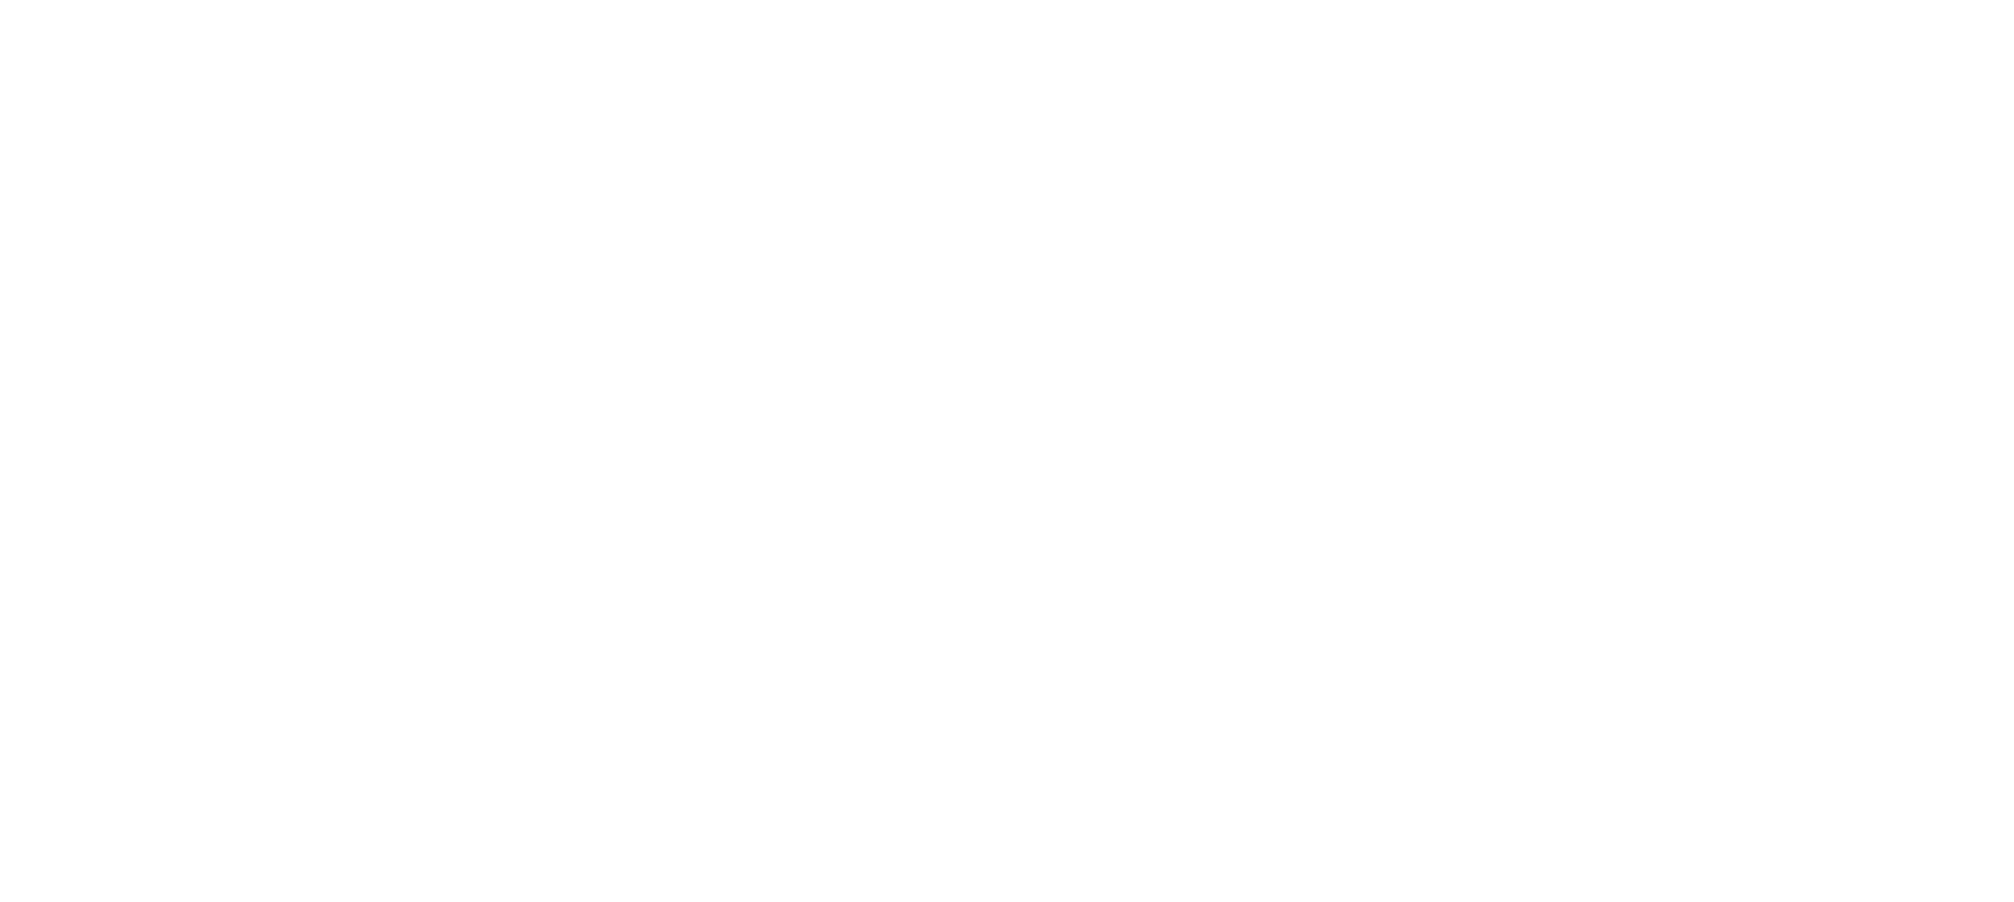 Logotipo blanco paisaje encontrado. Arquitectura y paisajismo